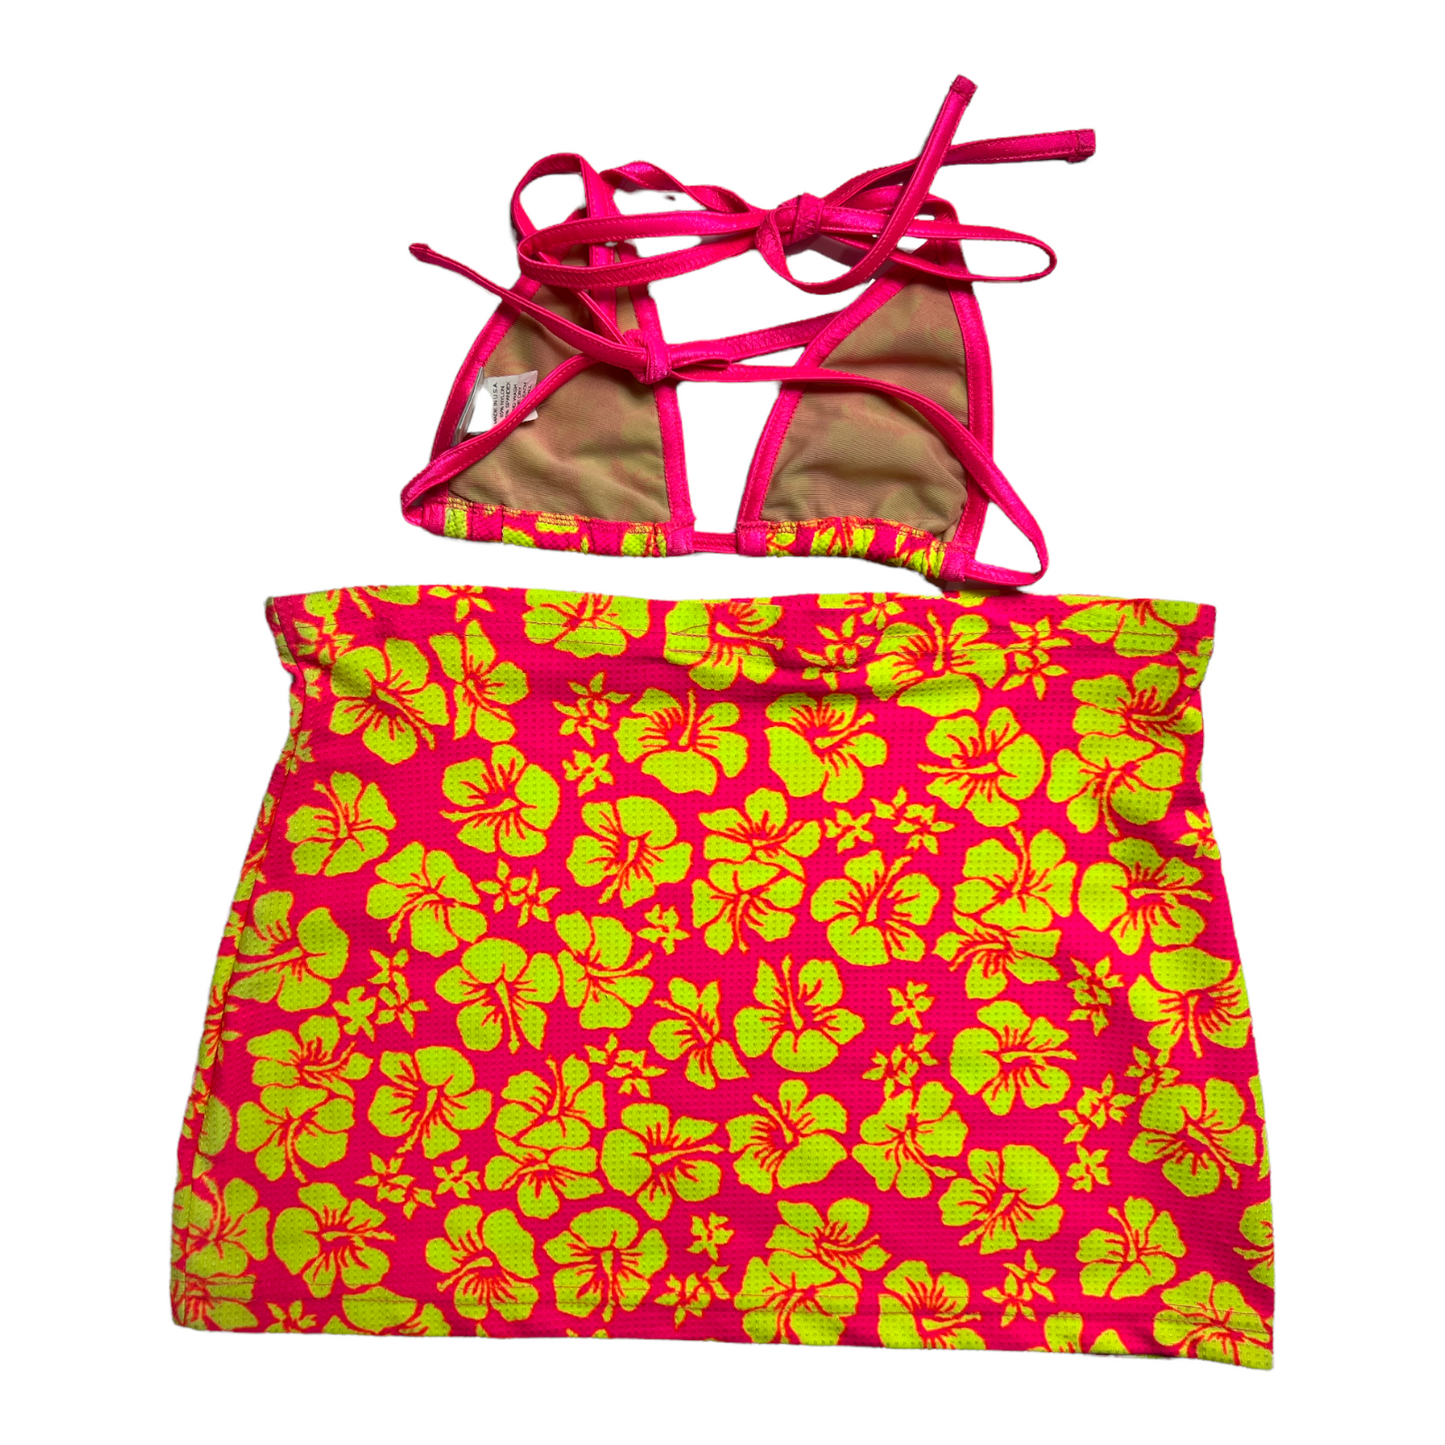 New Neon Pink/Yellow String Bikini Top with Skirt Swimsuit size XS (SwimWear)